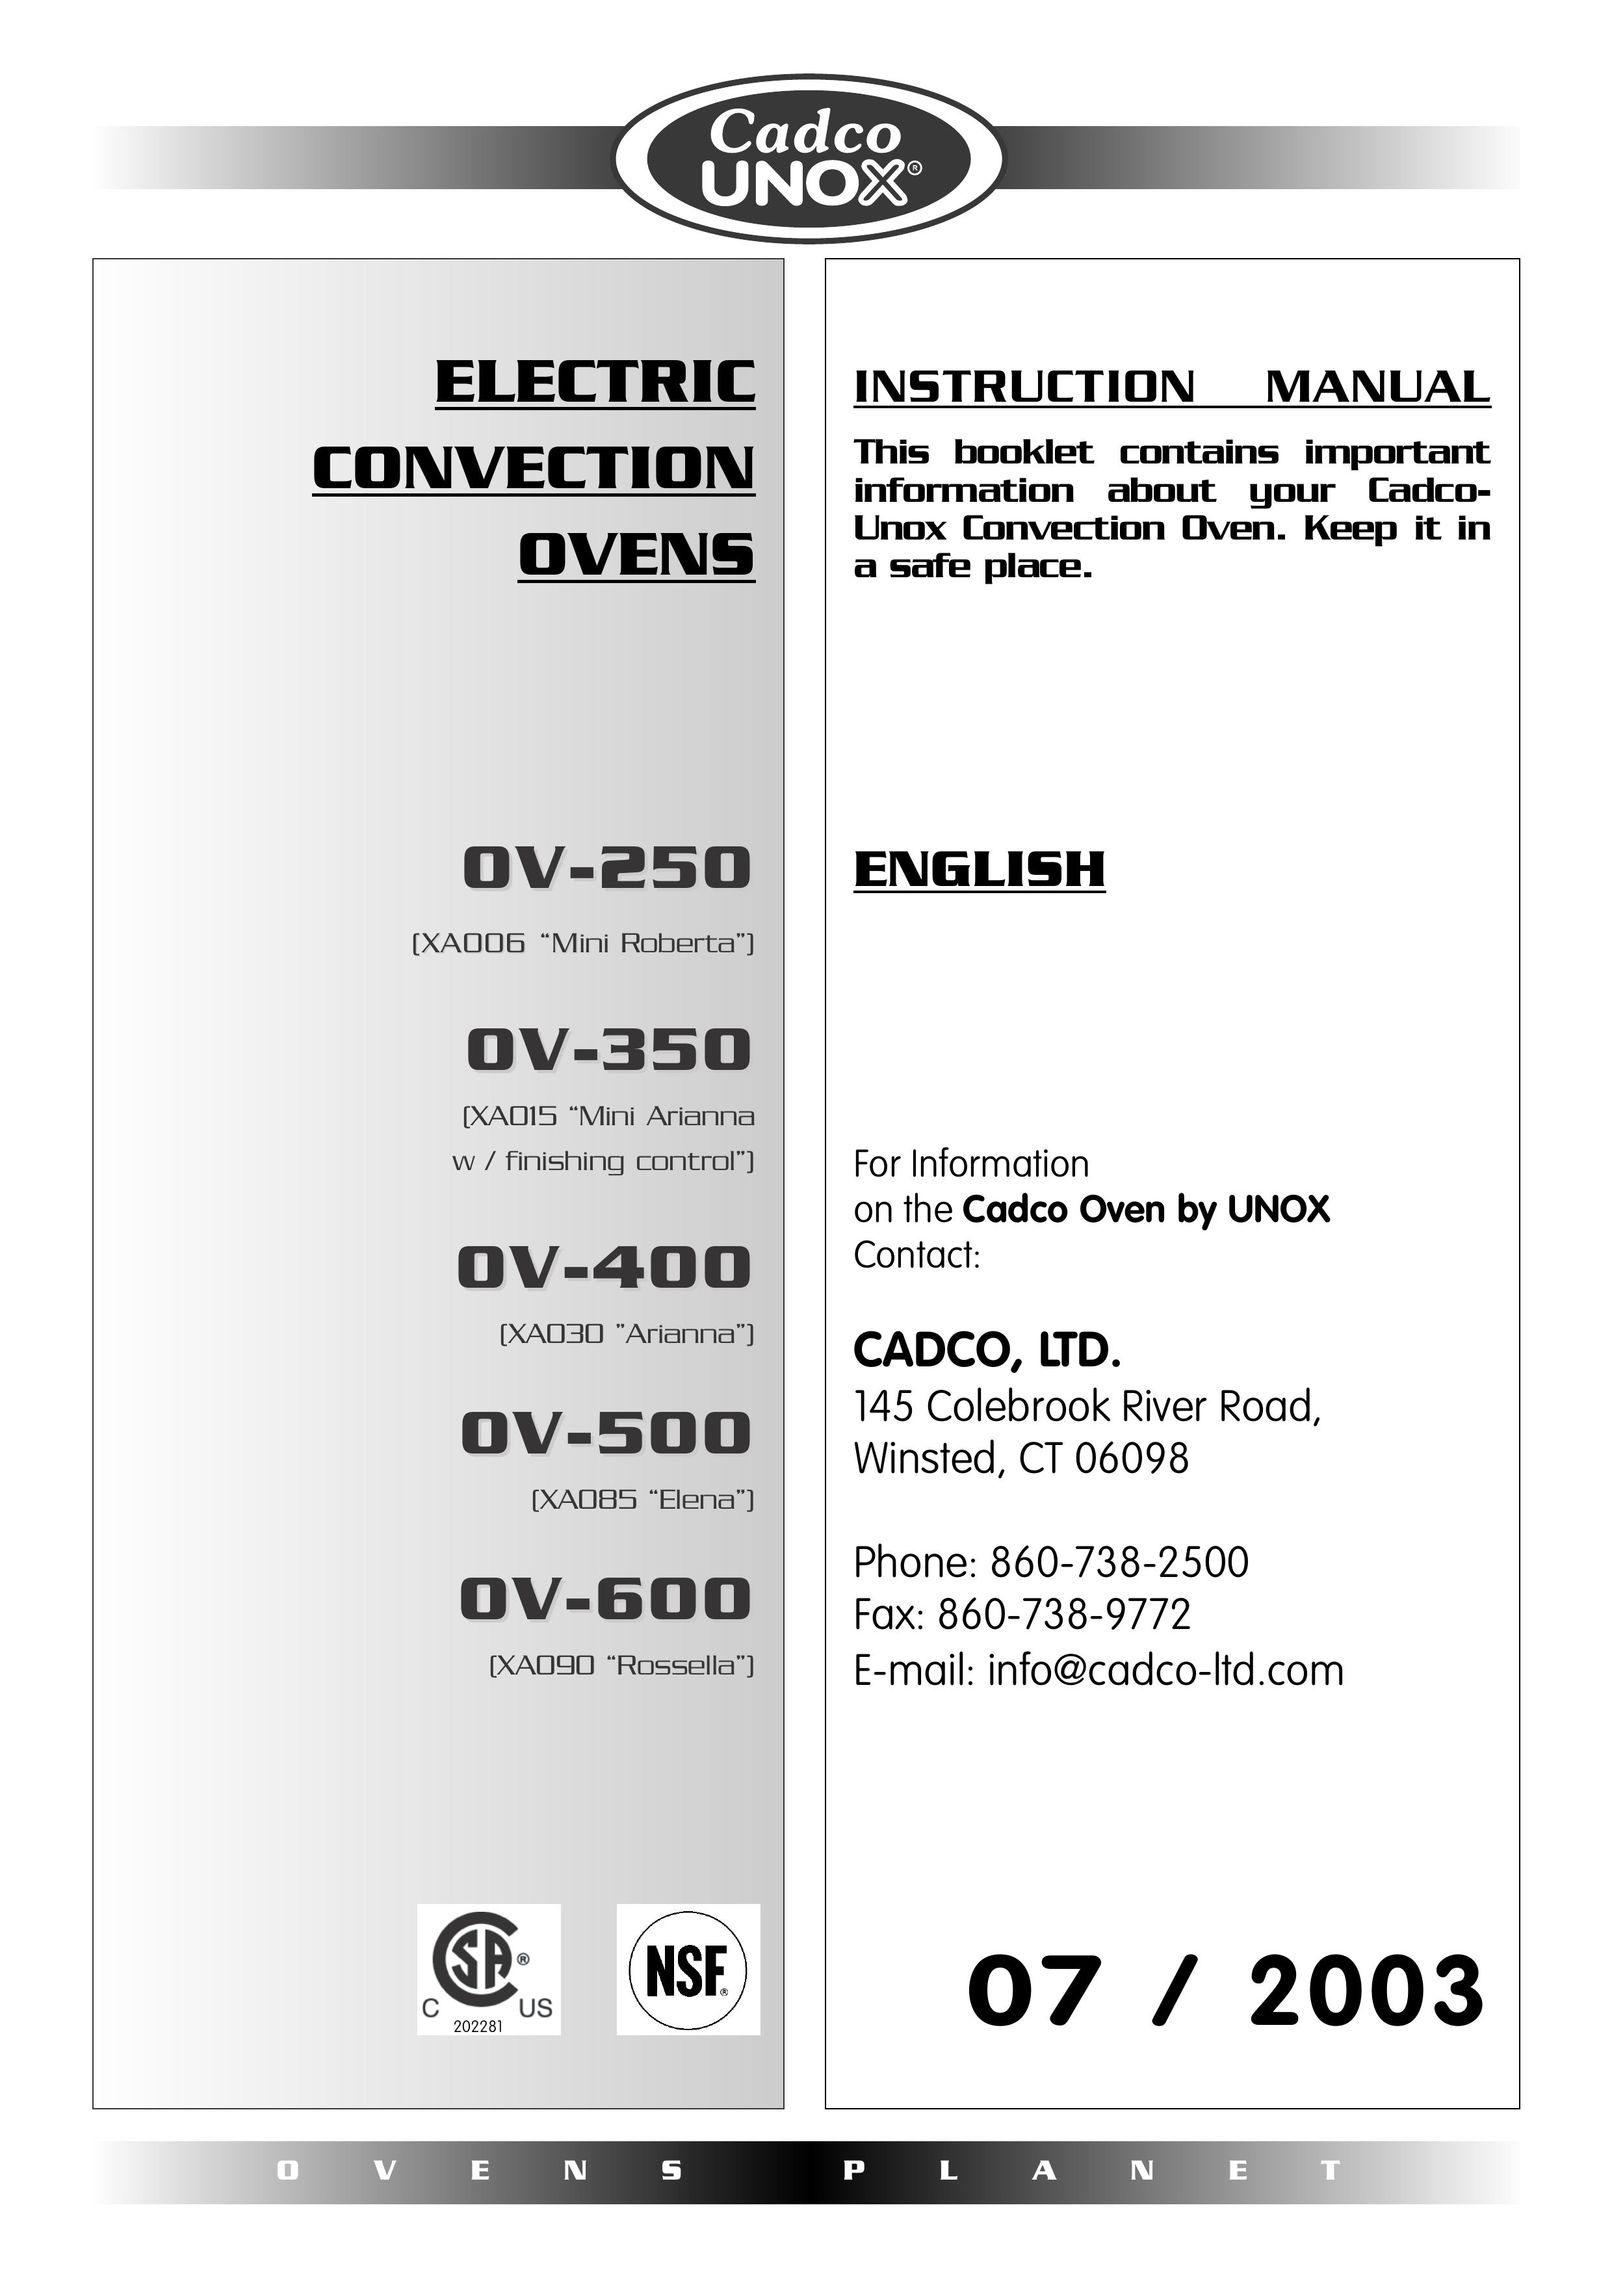 Cadco OV-500 Convection Oven User Manual